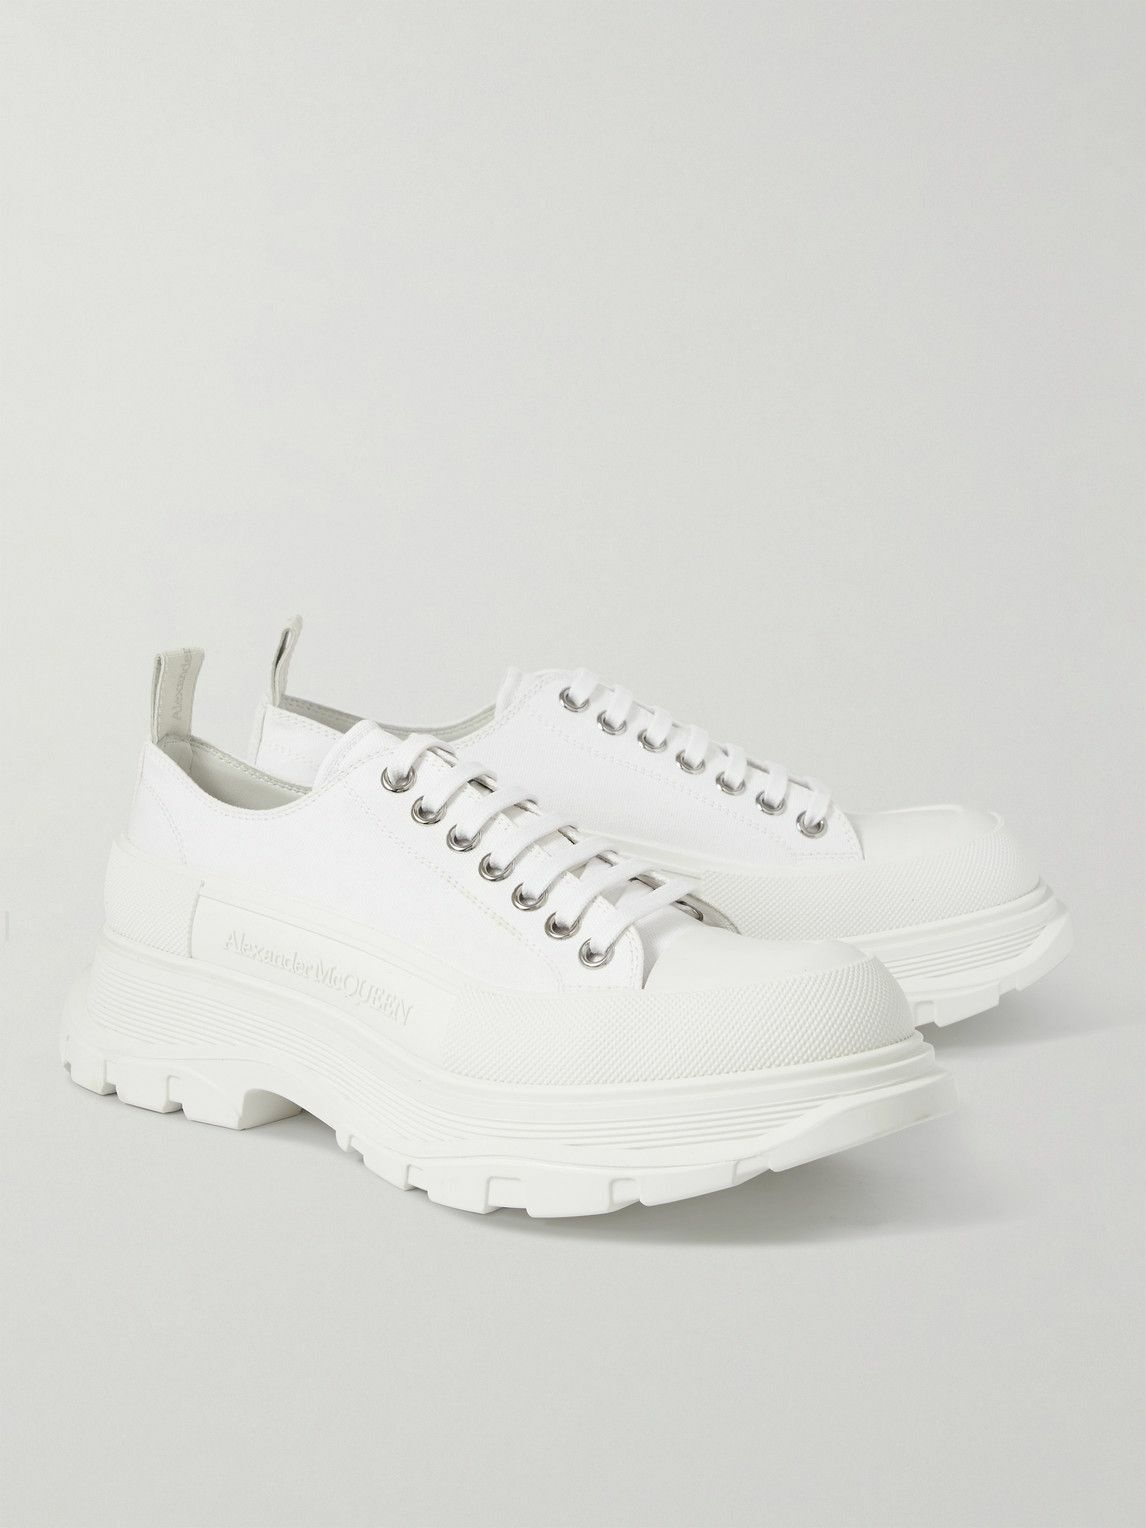 Alexander McQueen - Tread Slick Rubber-Trimmed Canvas Sneakers - White ...